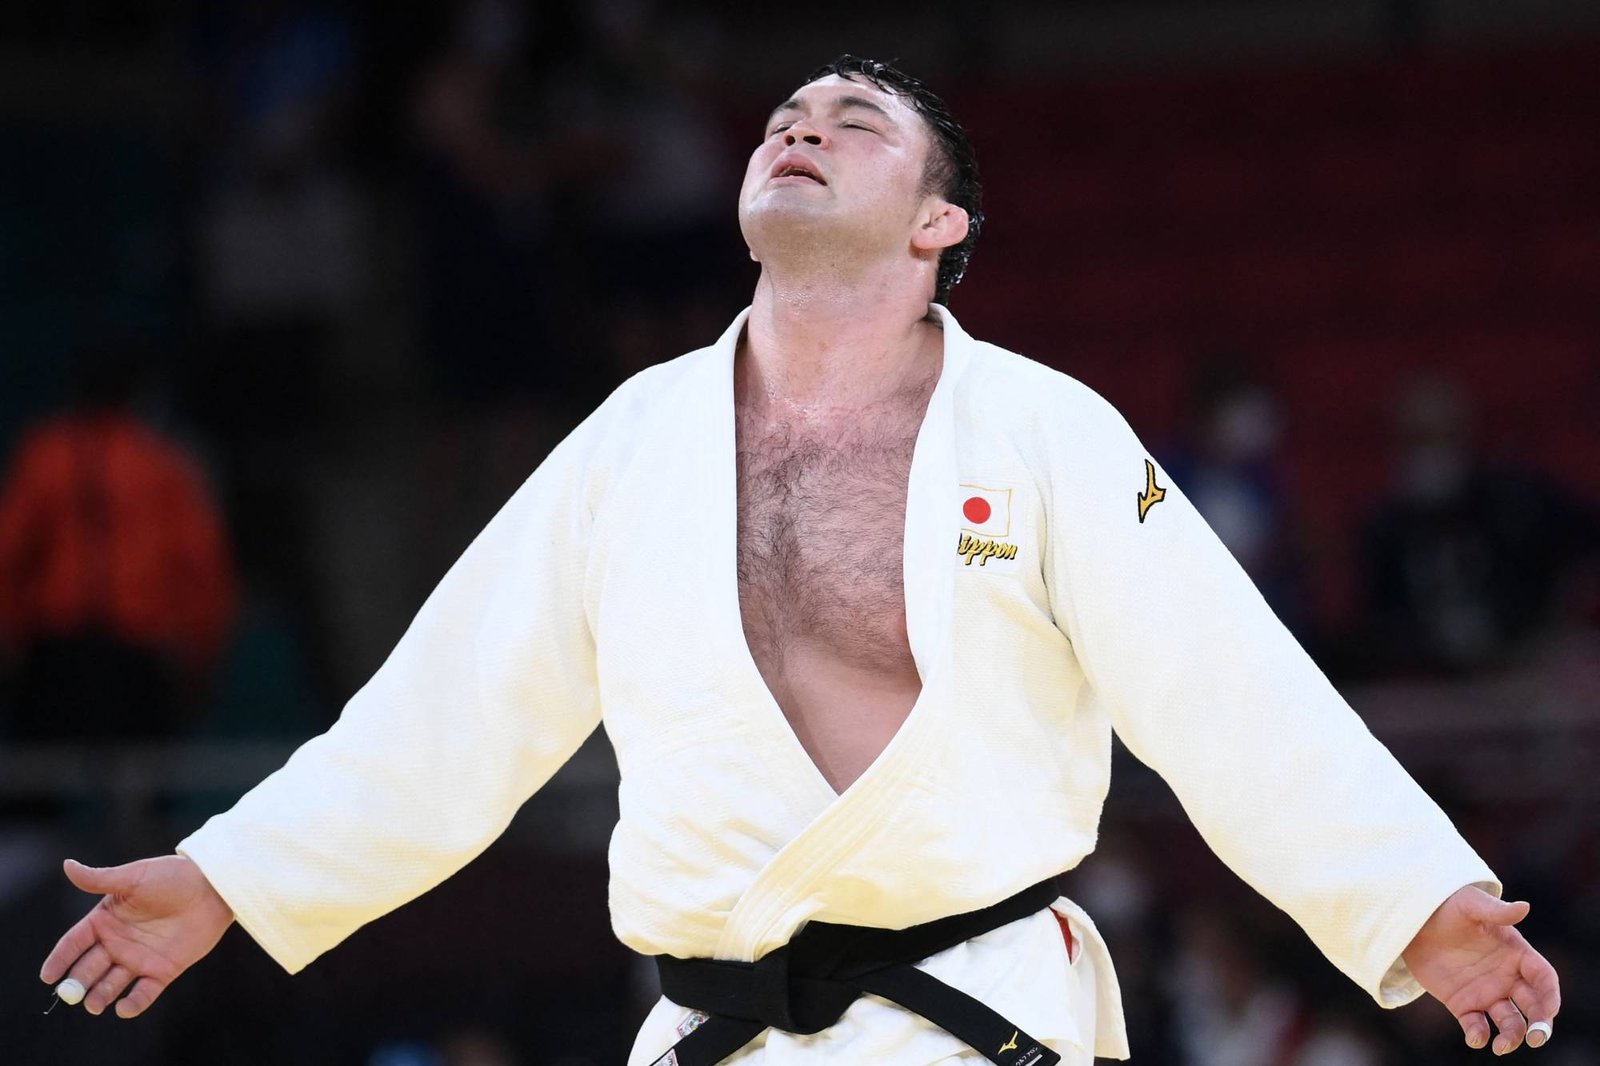 Japan's Wolf Aaron won Judo Gold medal